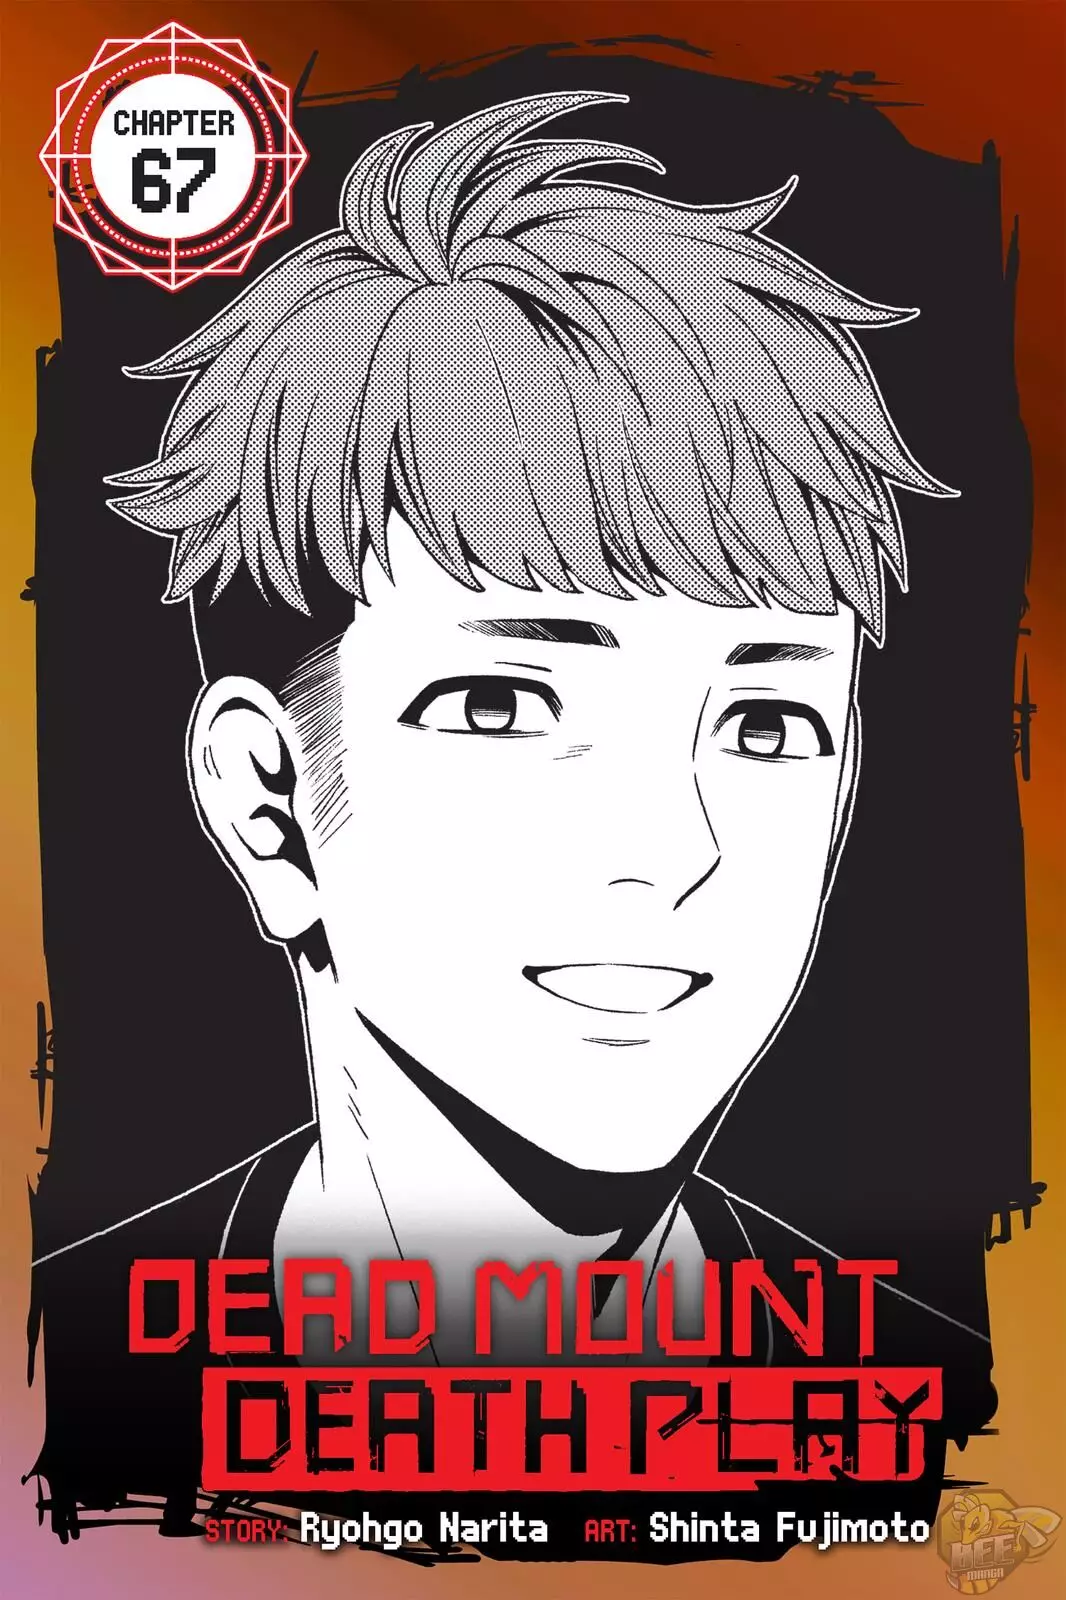 Is anybody reading dead mount death play? I don't really hear